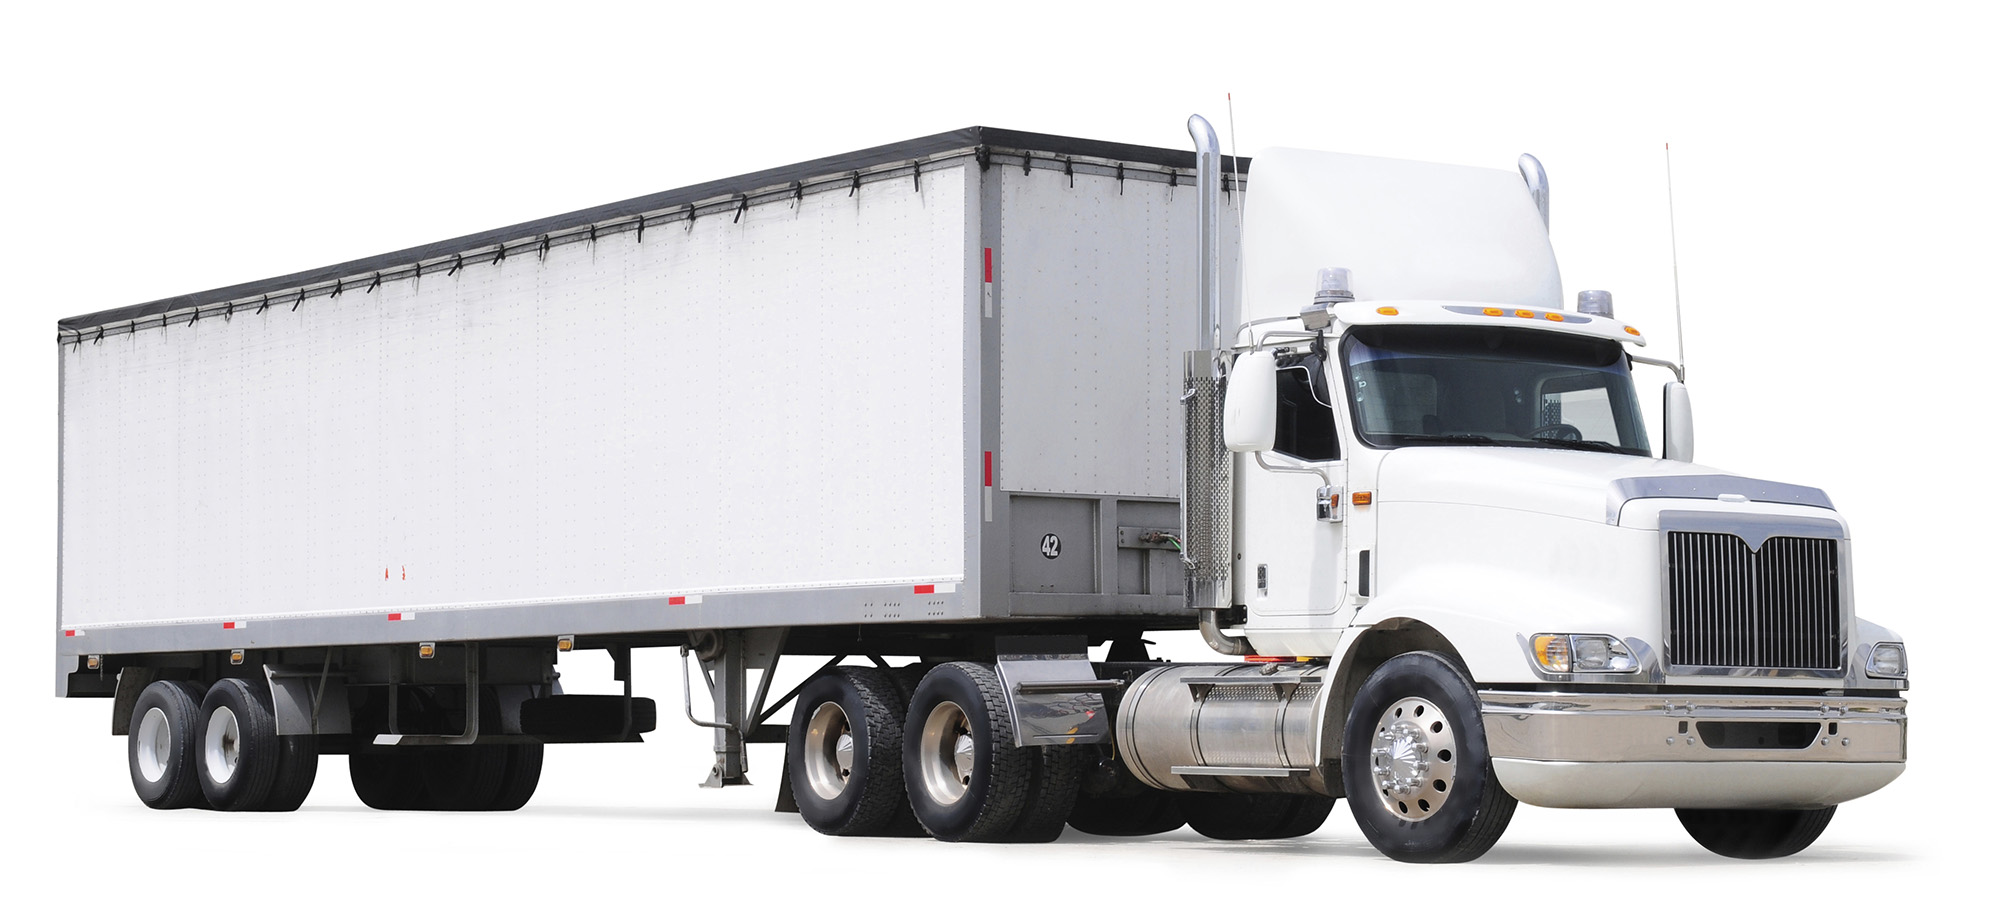 Buses \u0026 Trucks  California Fuel Cell Partnership